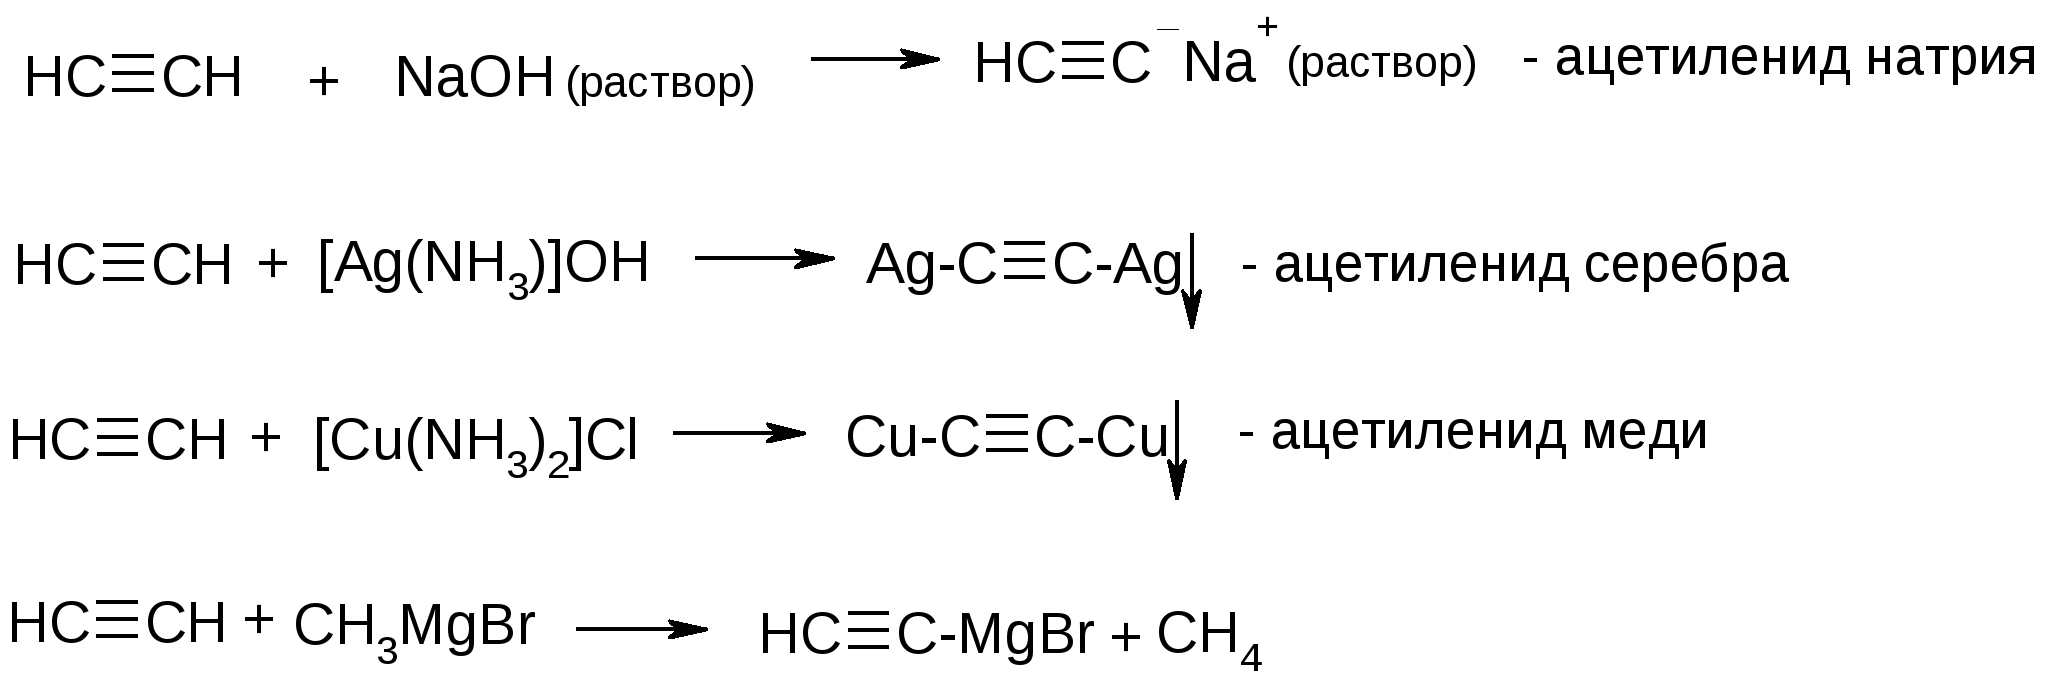 Ацетиленид серебра получение реакция. Получение ацетиленида натрия реакция. Ацетилен плюс гидроксид натрия. Ацетиленид натрия получение.